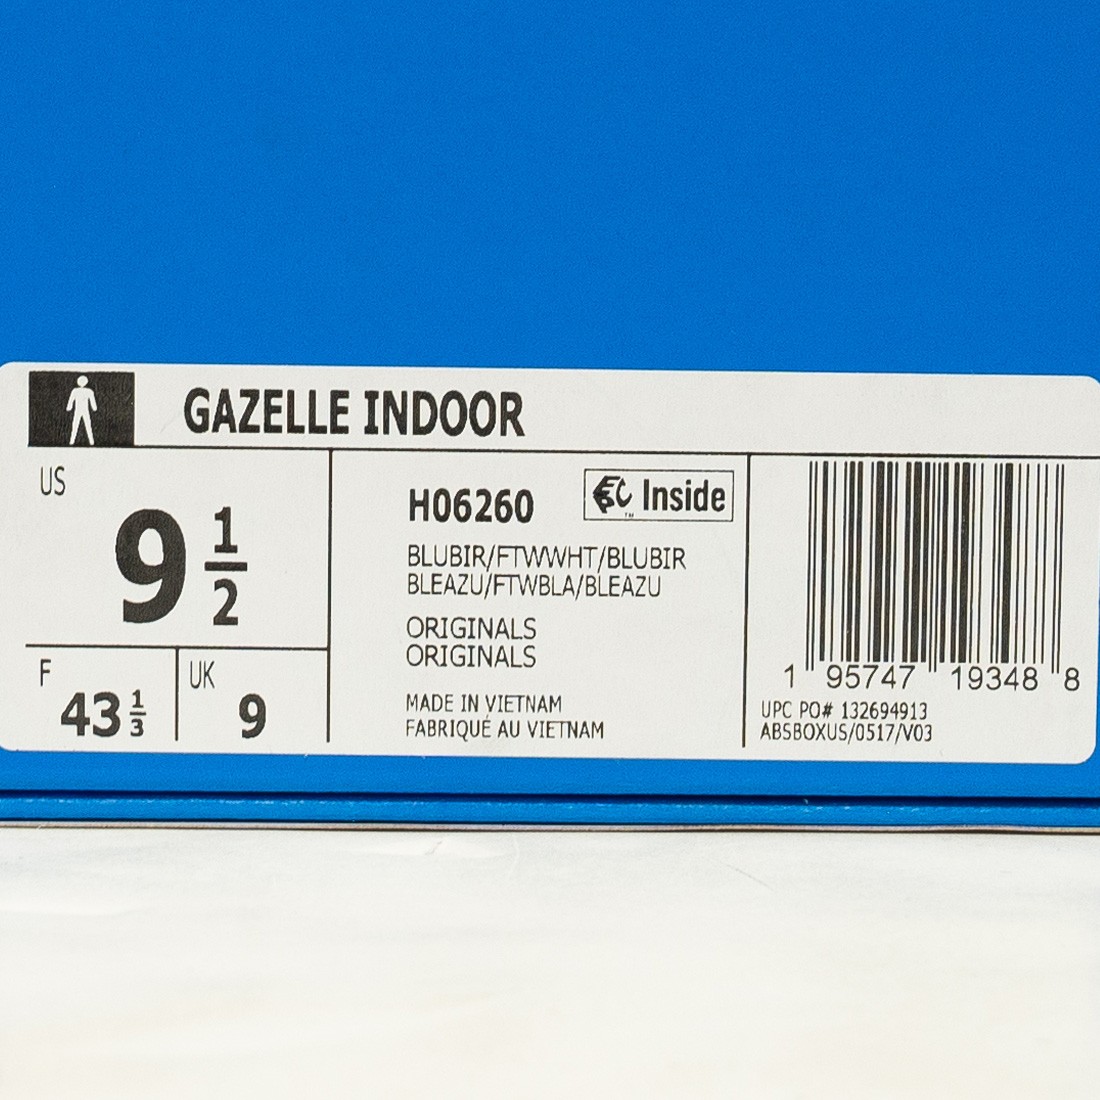  adidas Originals Gazelle Indoor Shoes Men H06260  (Bluebird/Foot), Size 8.5